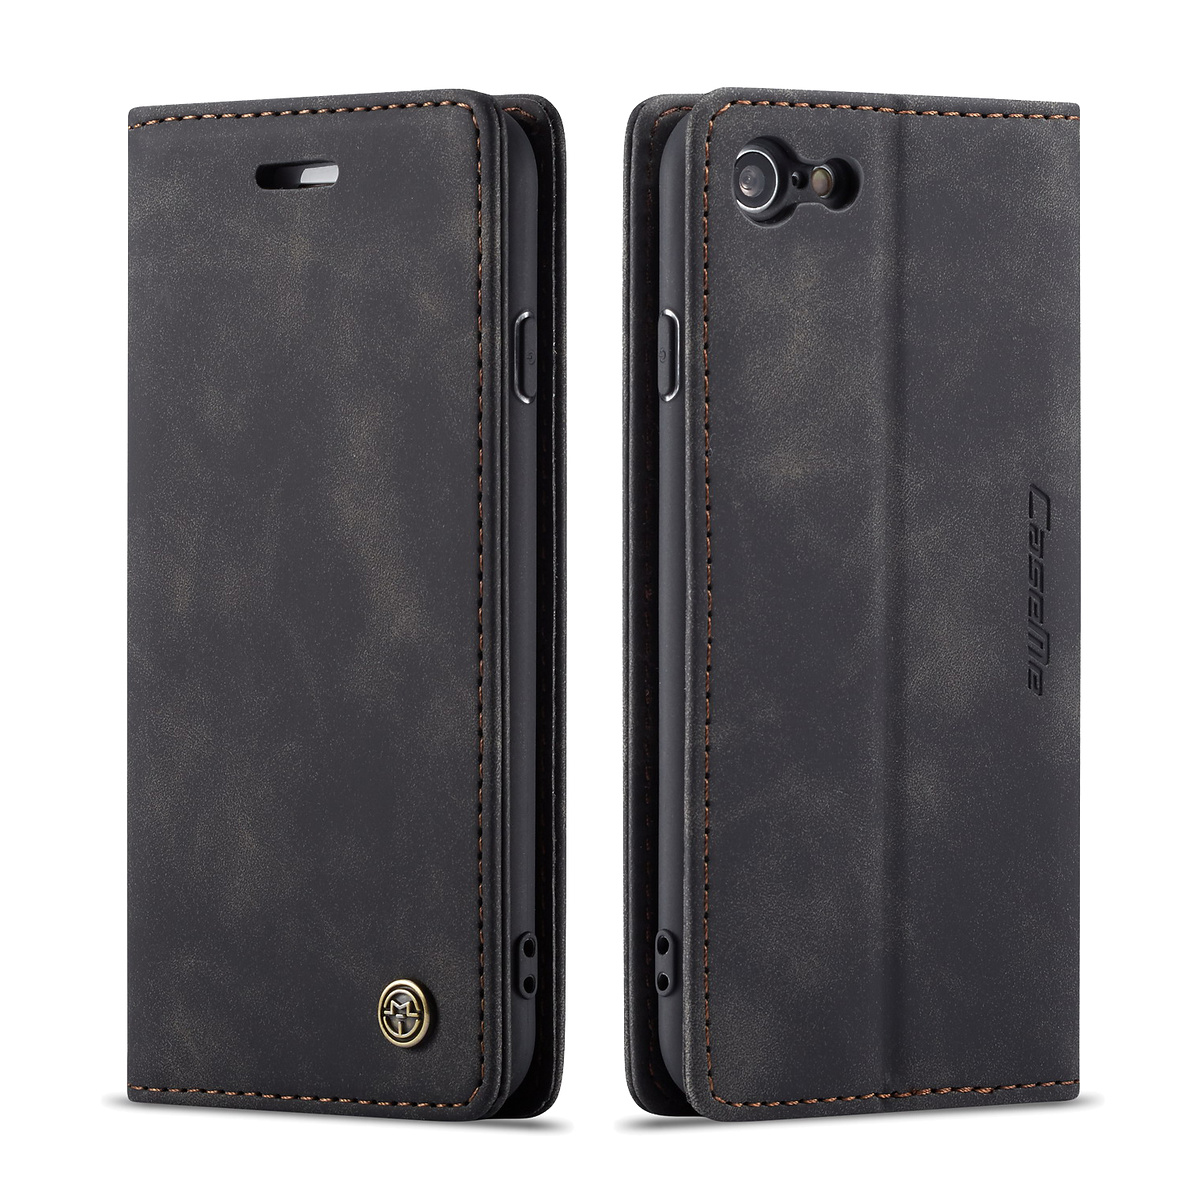 CaseMe plånboksfodral till iPhone 8/7,  svart